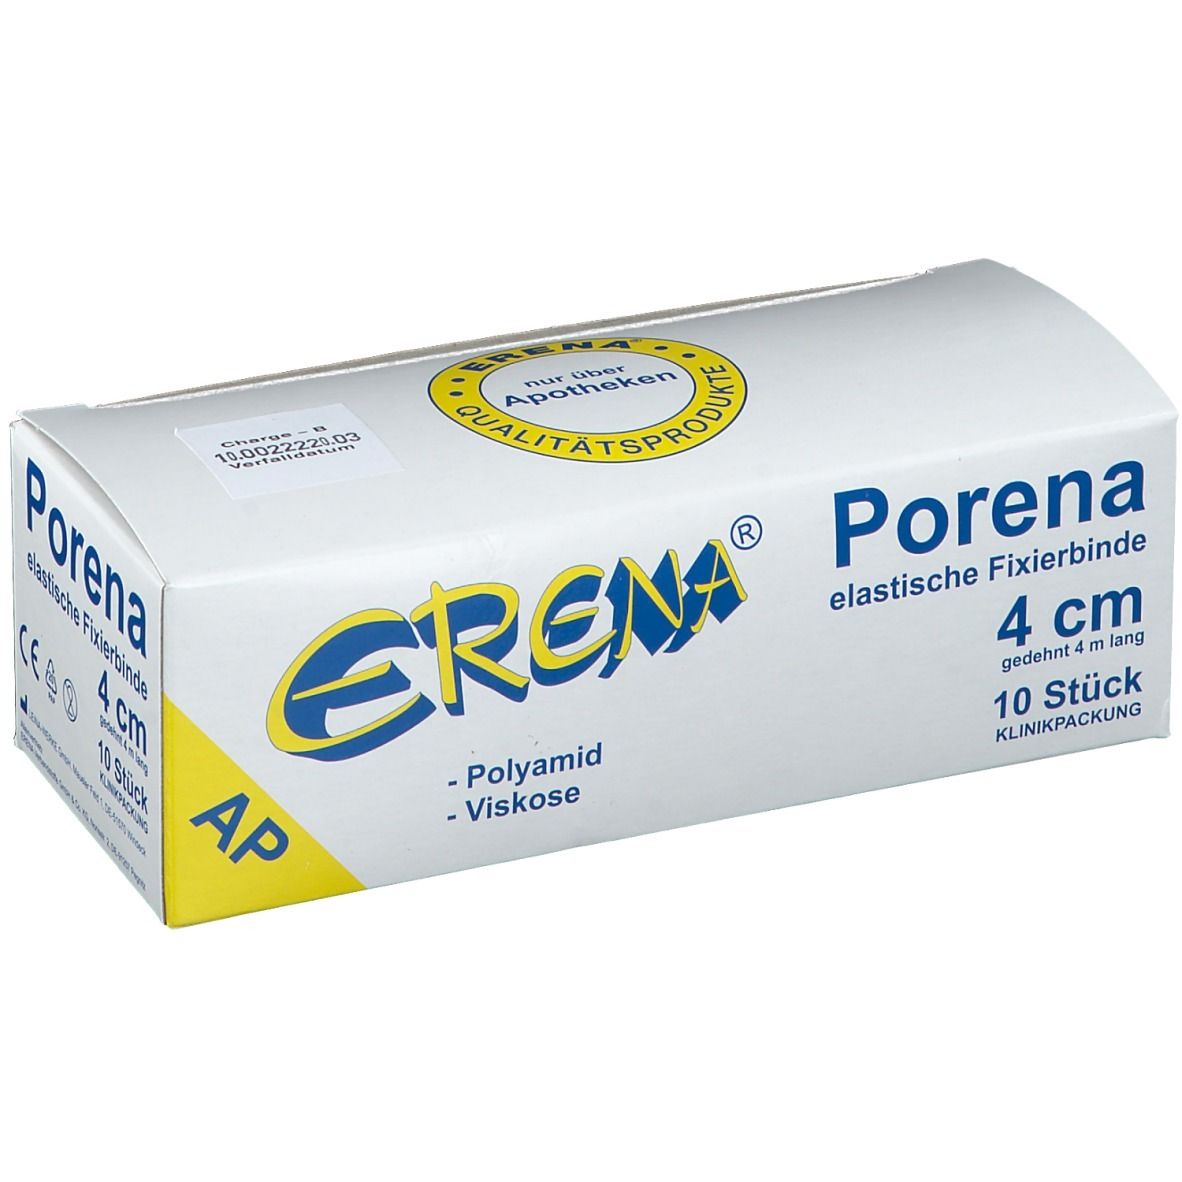 Erena® Porena elastische Fixierbinde 4 cm x 4 m